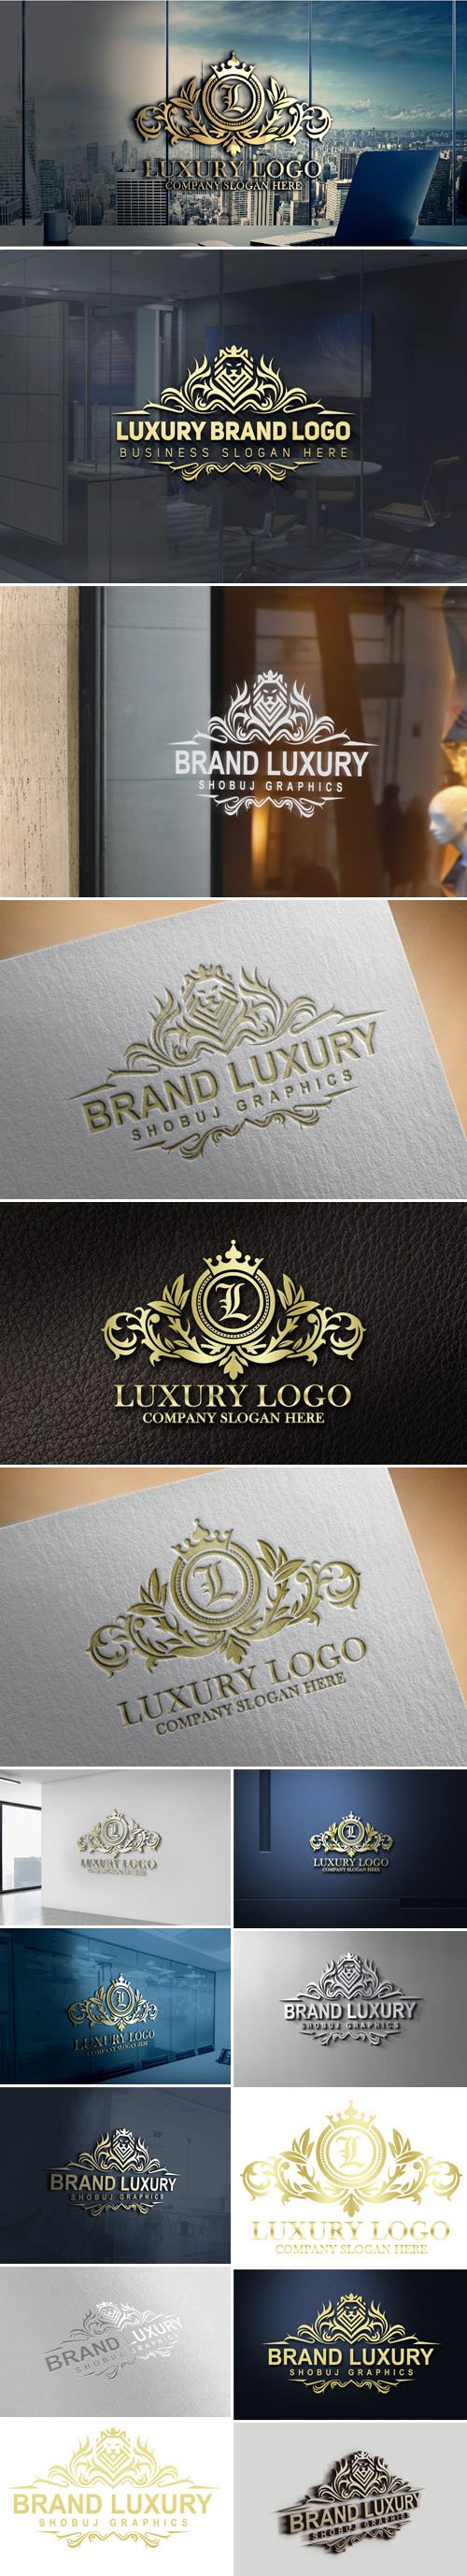 Modern Luxury Brand Logo Design PSD Mockups Templates